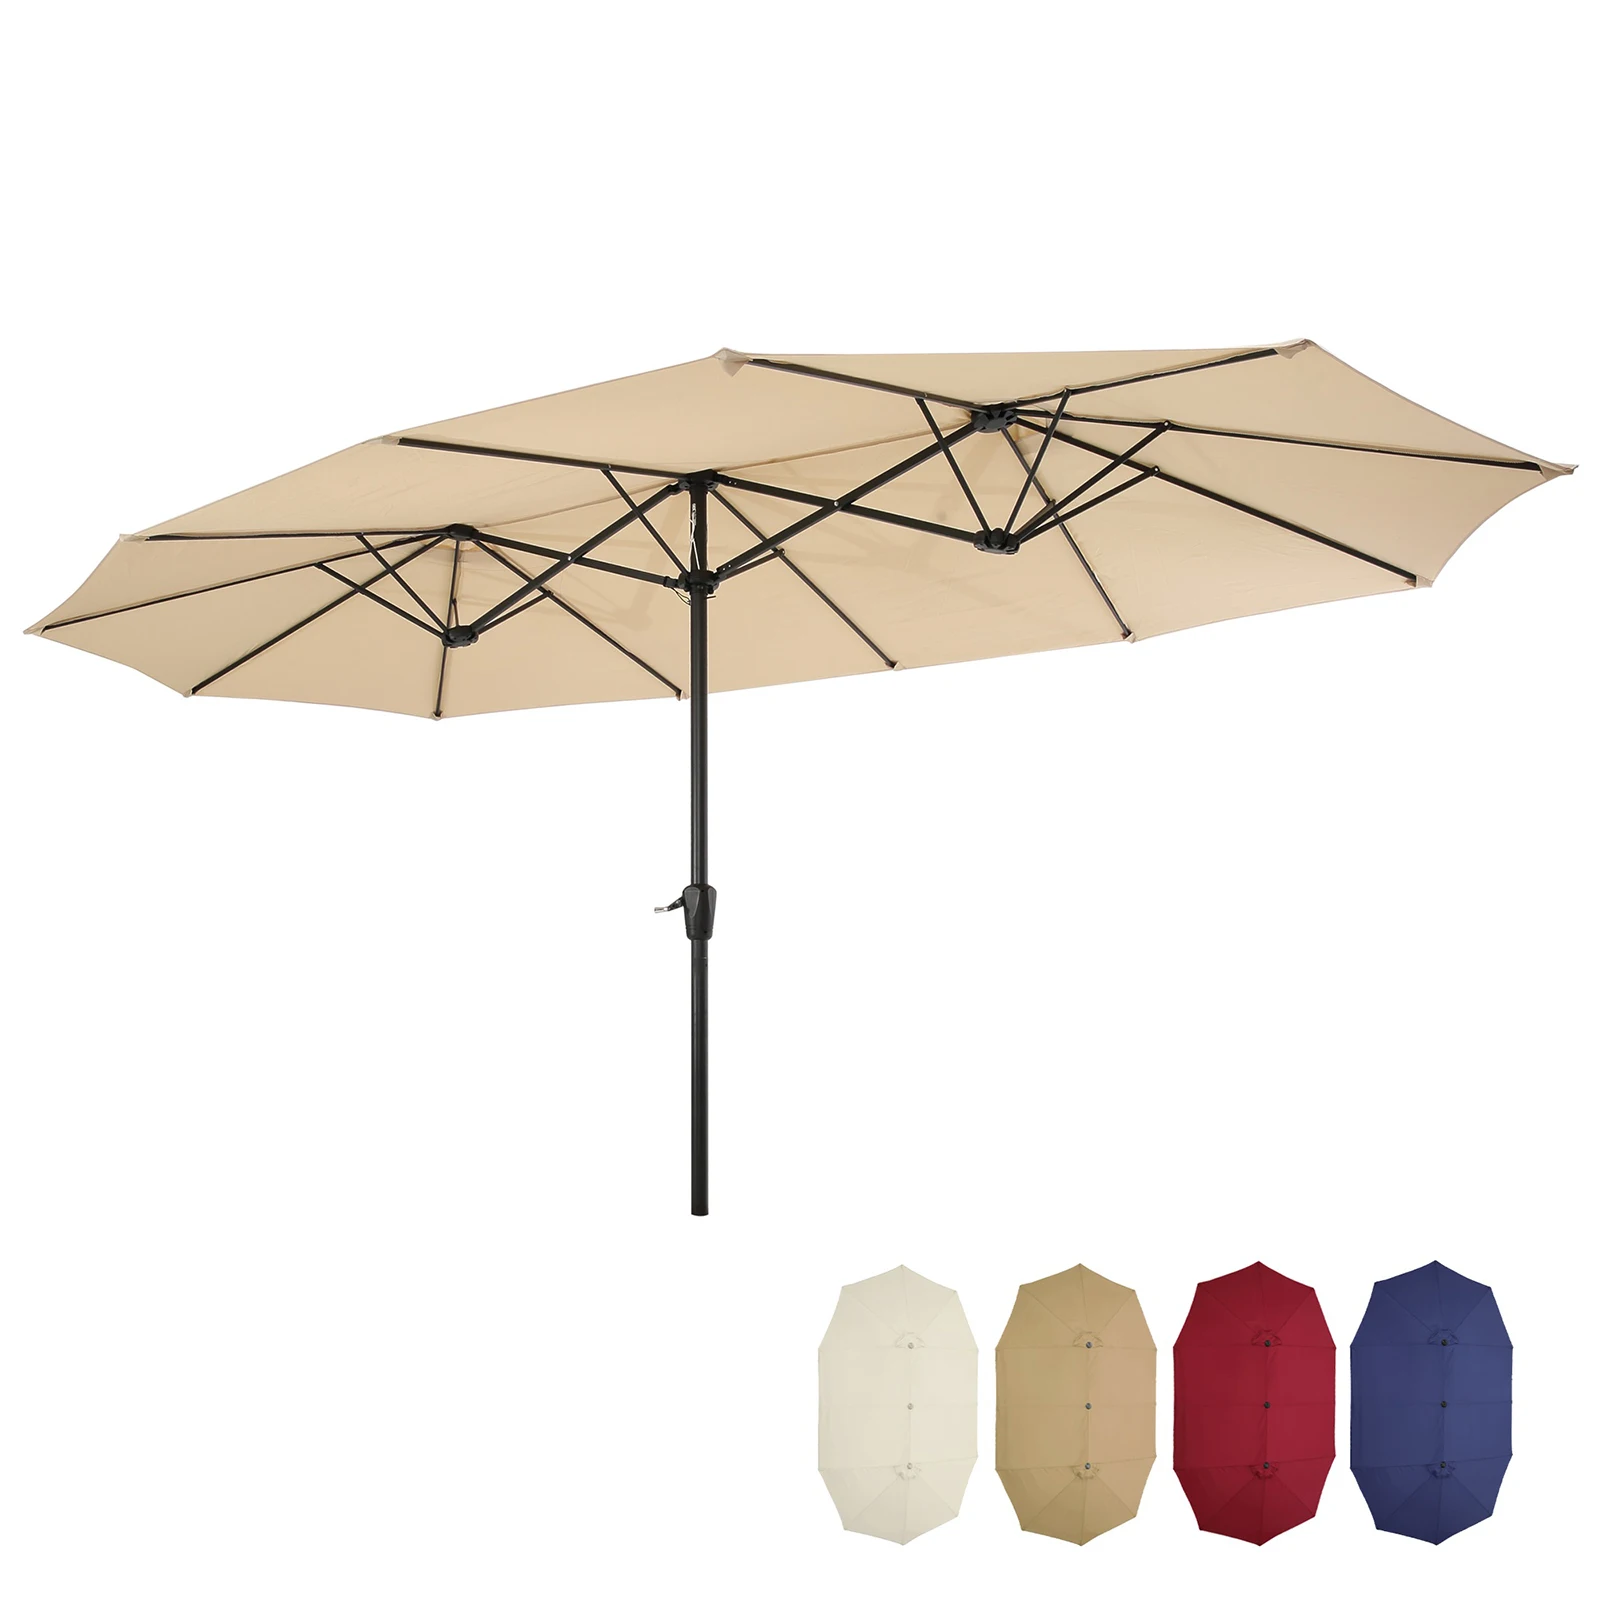 15x9ft Large Patio Umbrellas Double-Sided Rectangular Outdoor Steel Twin Patio Sun Shelter Market Umbrella Khaki